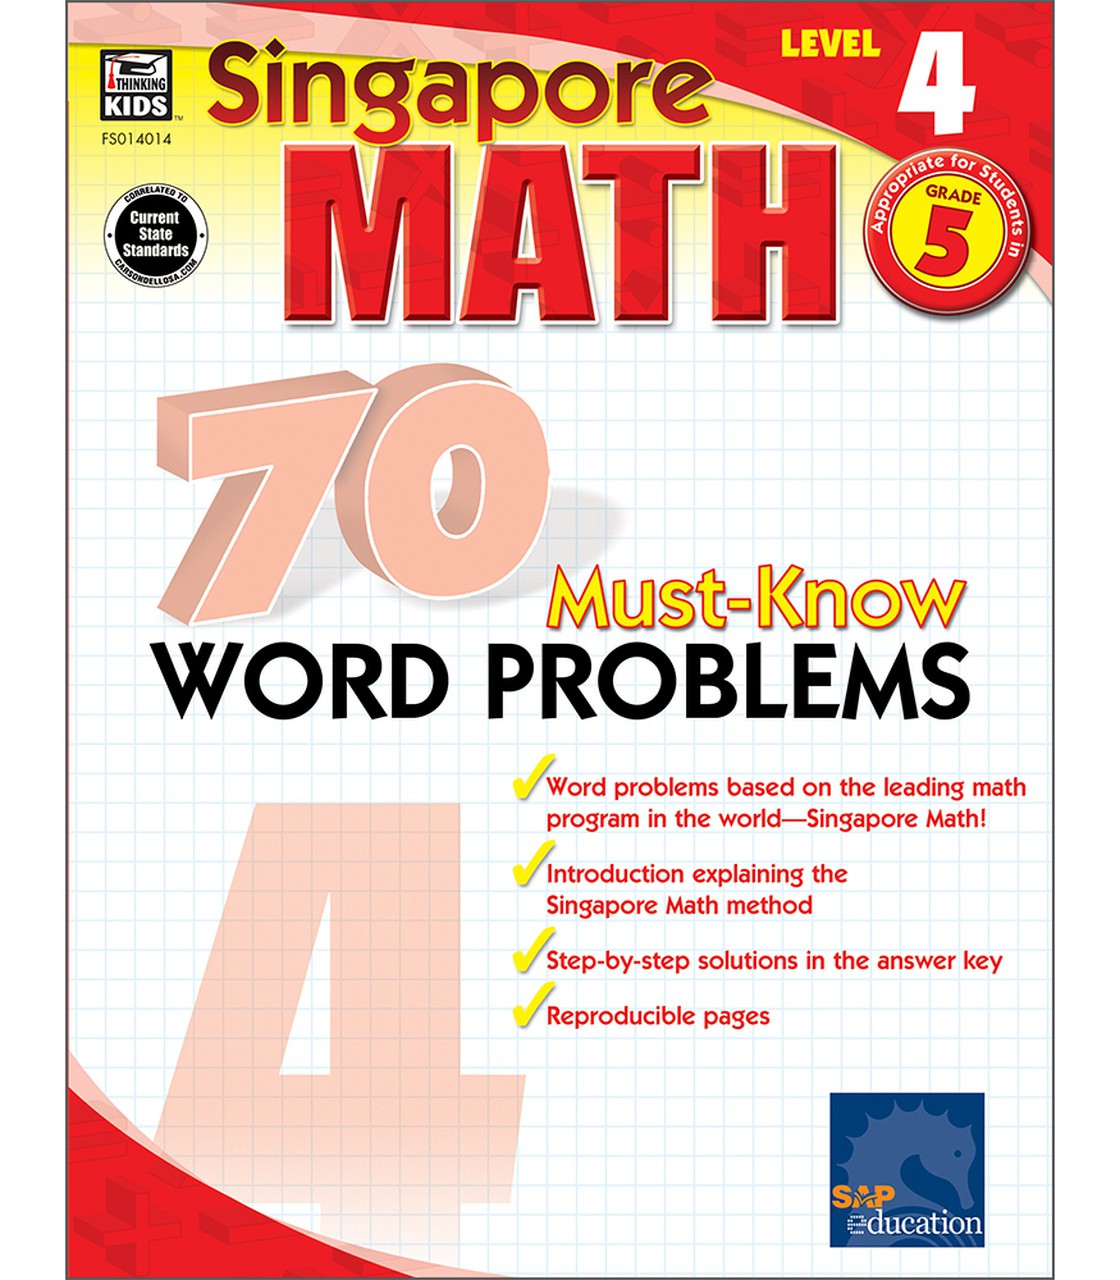 Singapore Word Problems Level 4